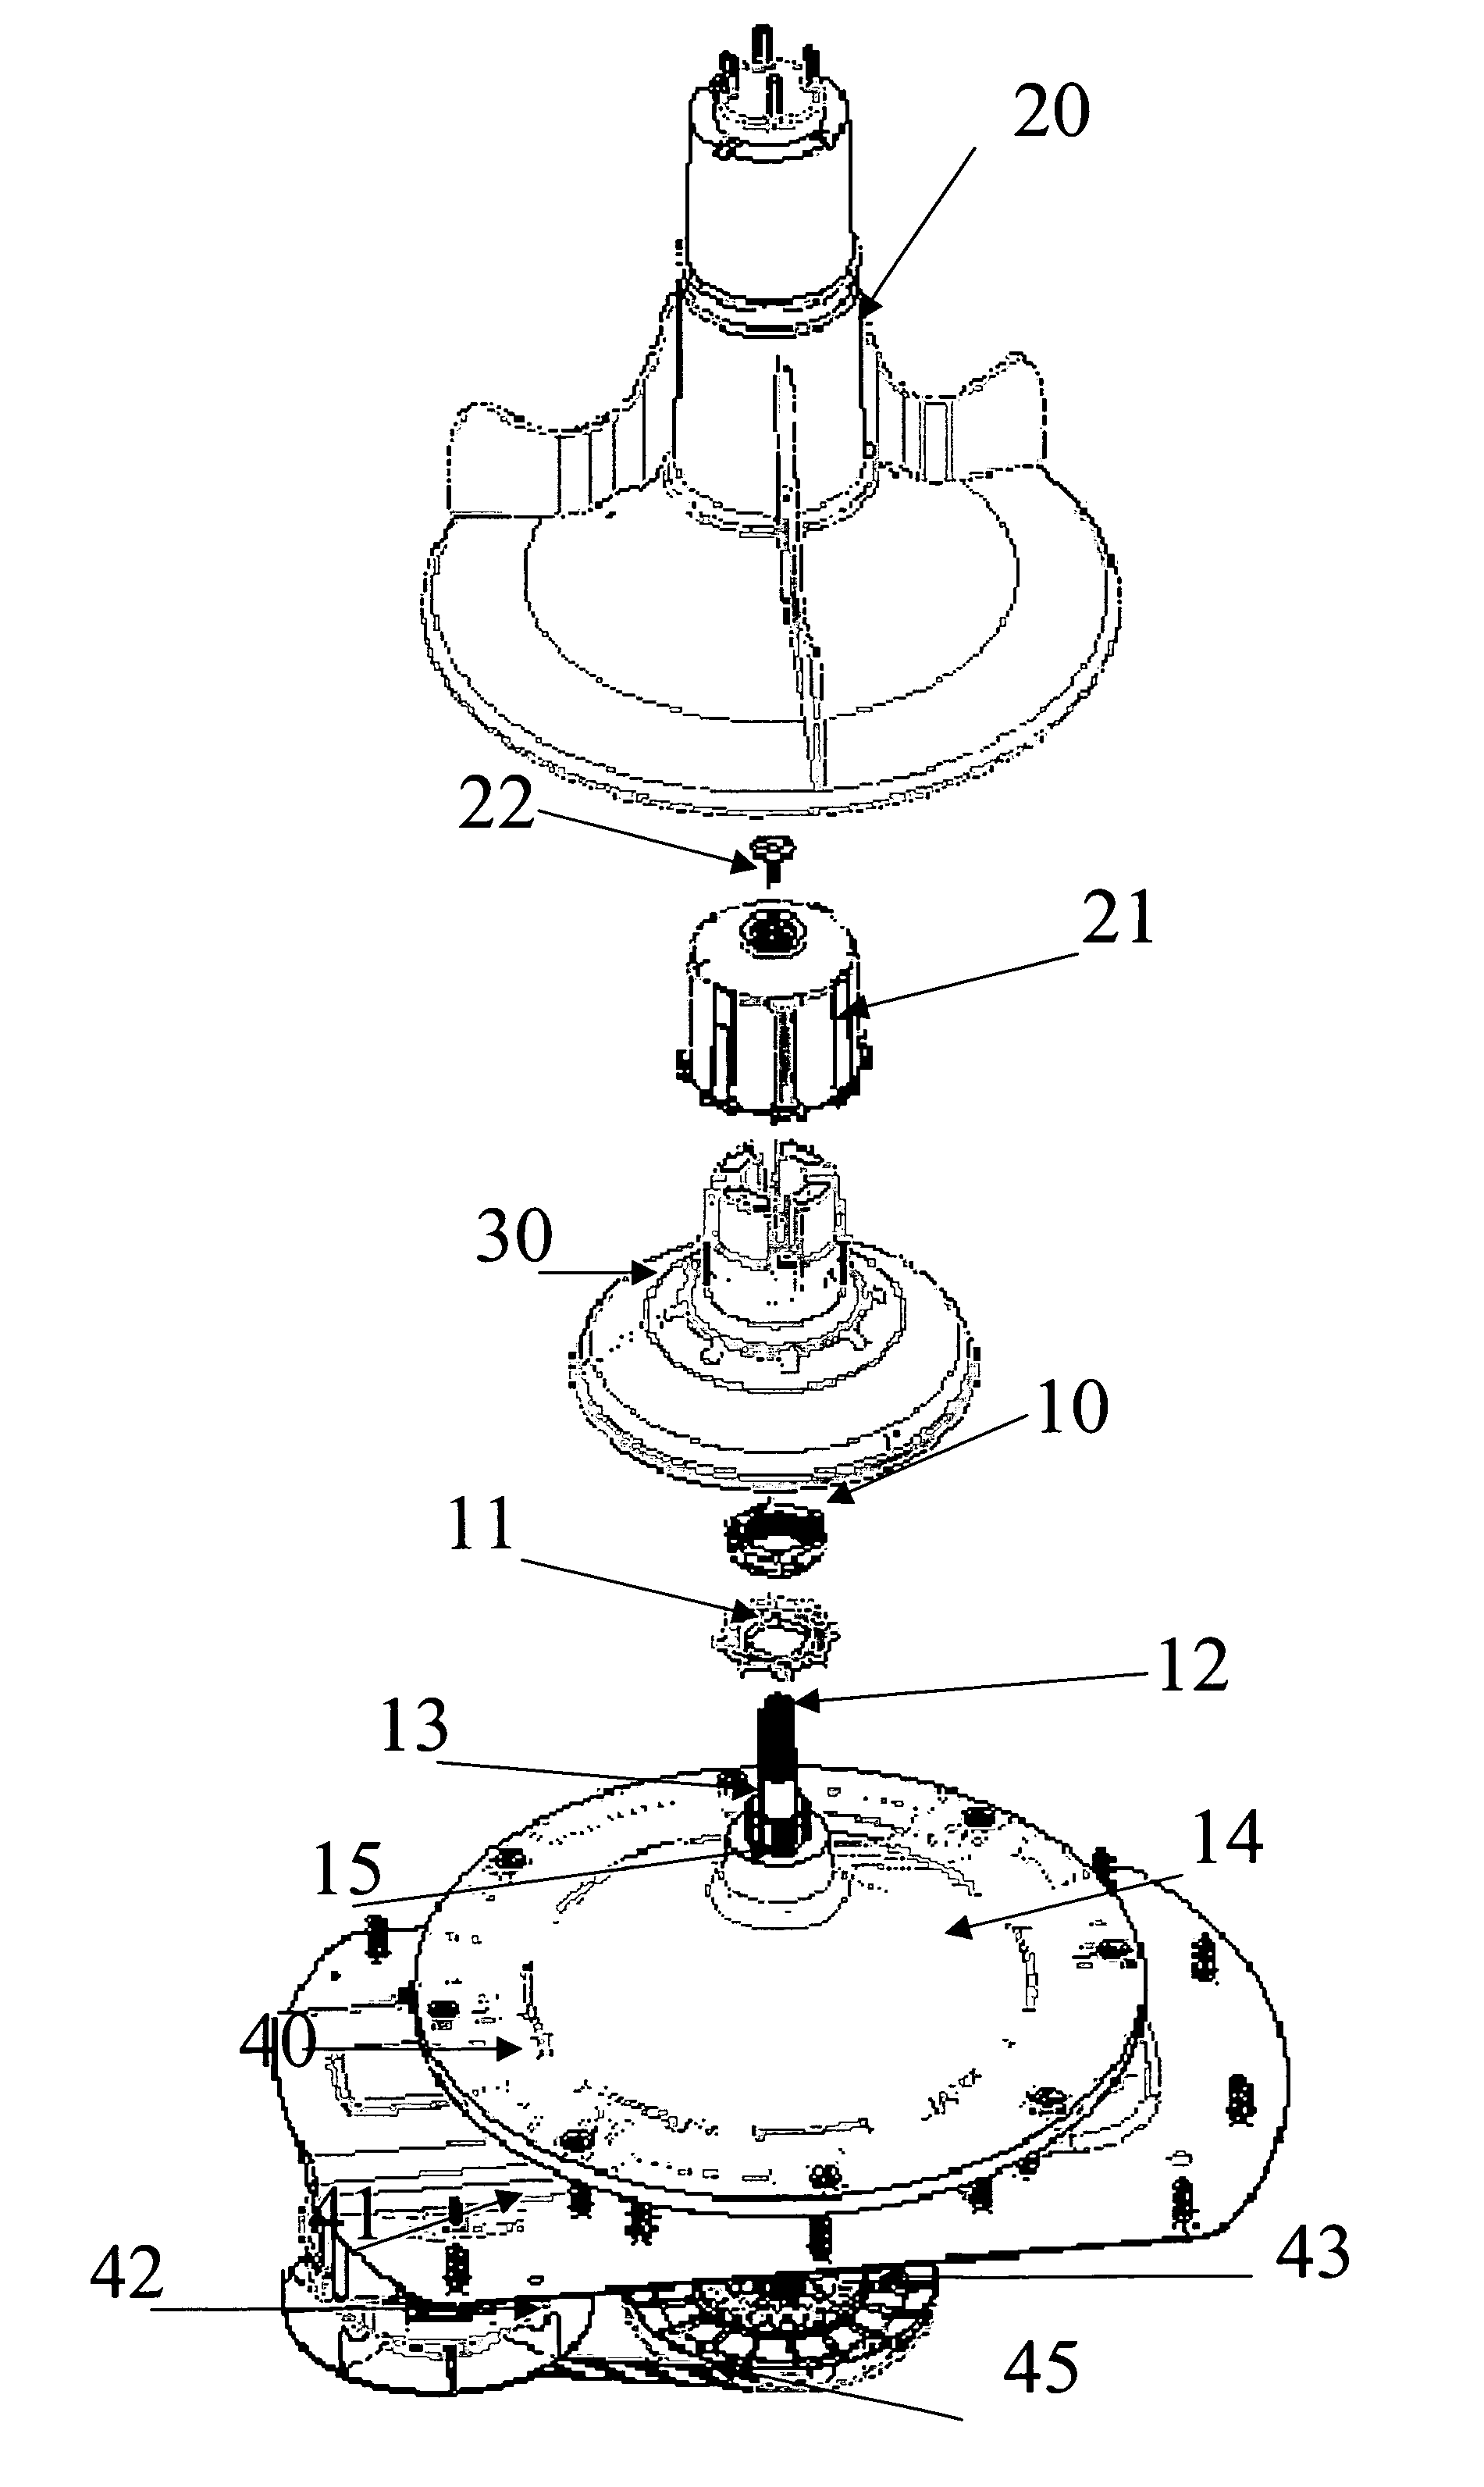 Floating clutch for dual concentric shafts arrangement